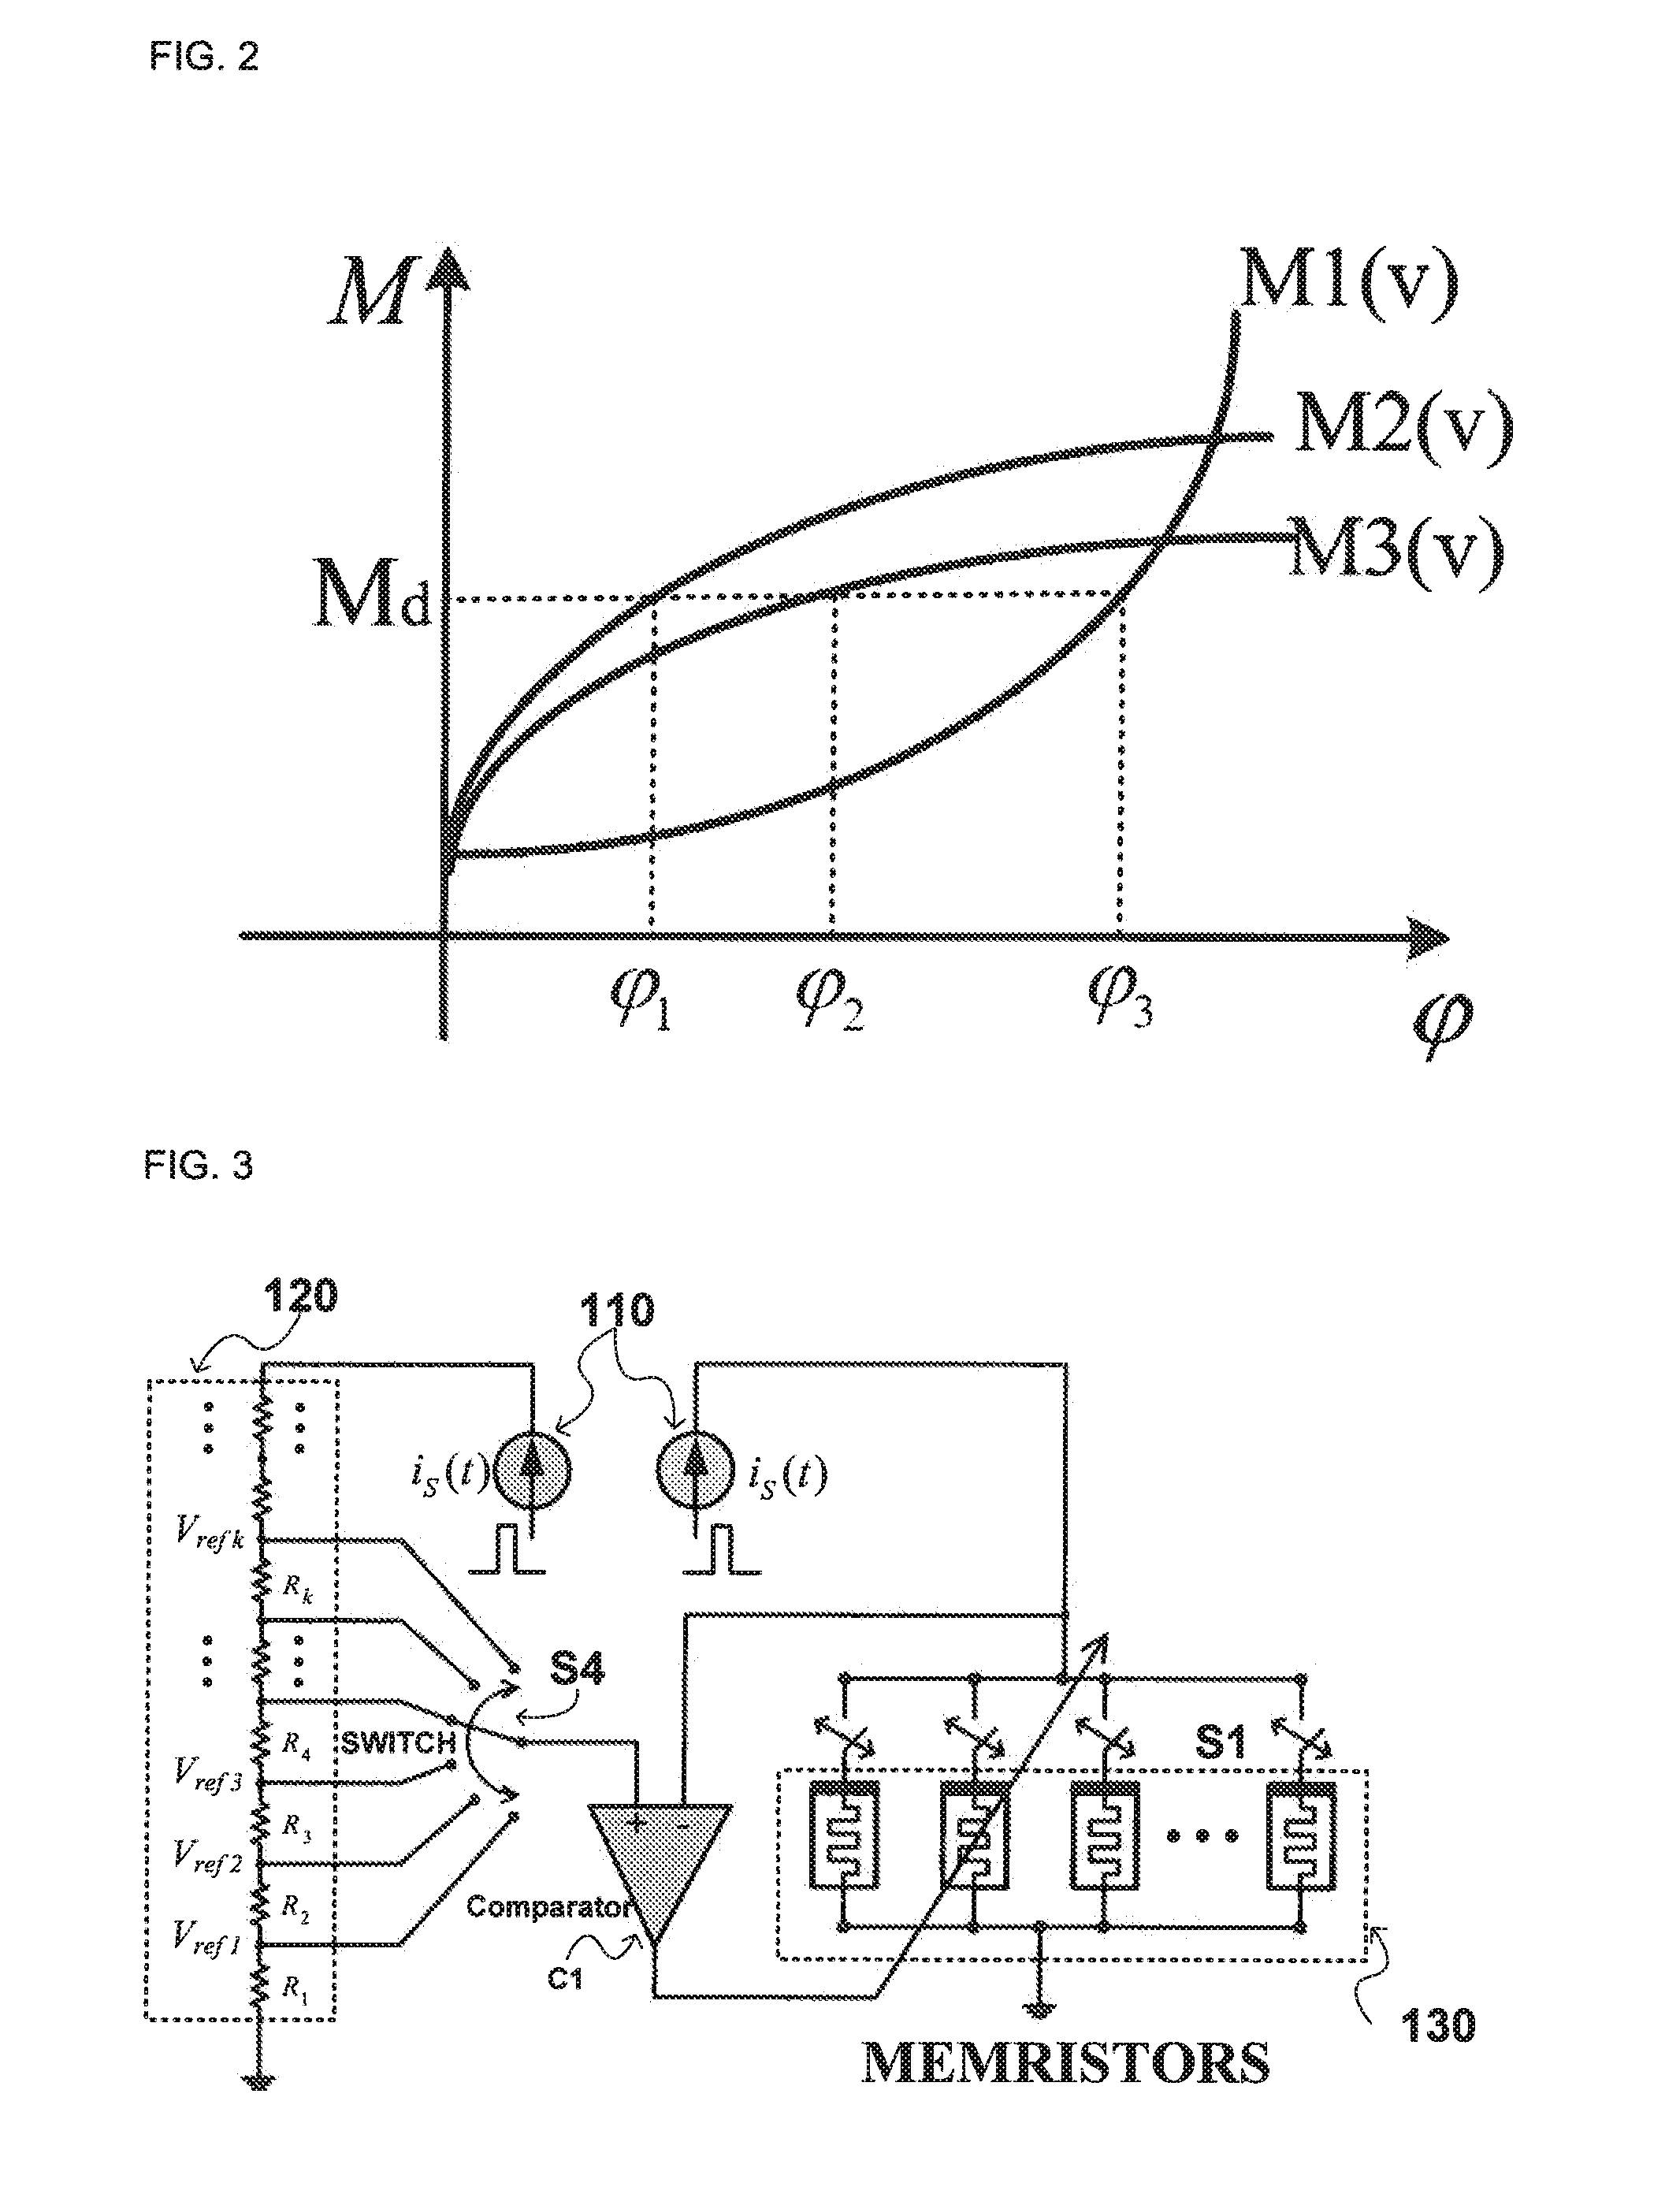 Method of implementing memristor-based multilevel memory using reference resistor array